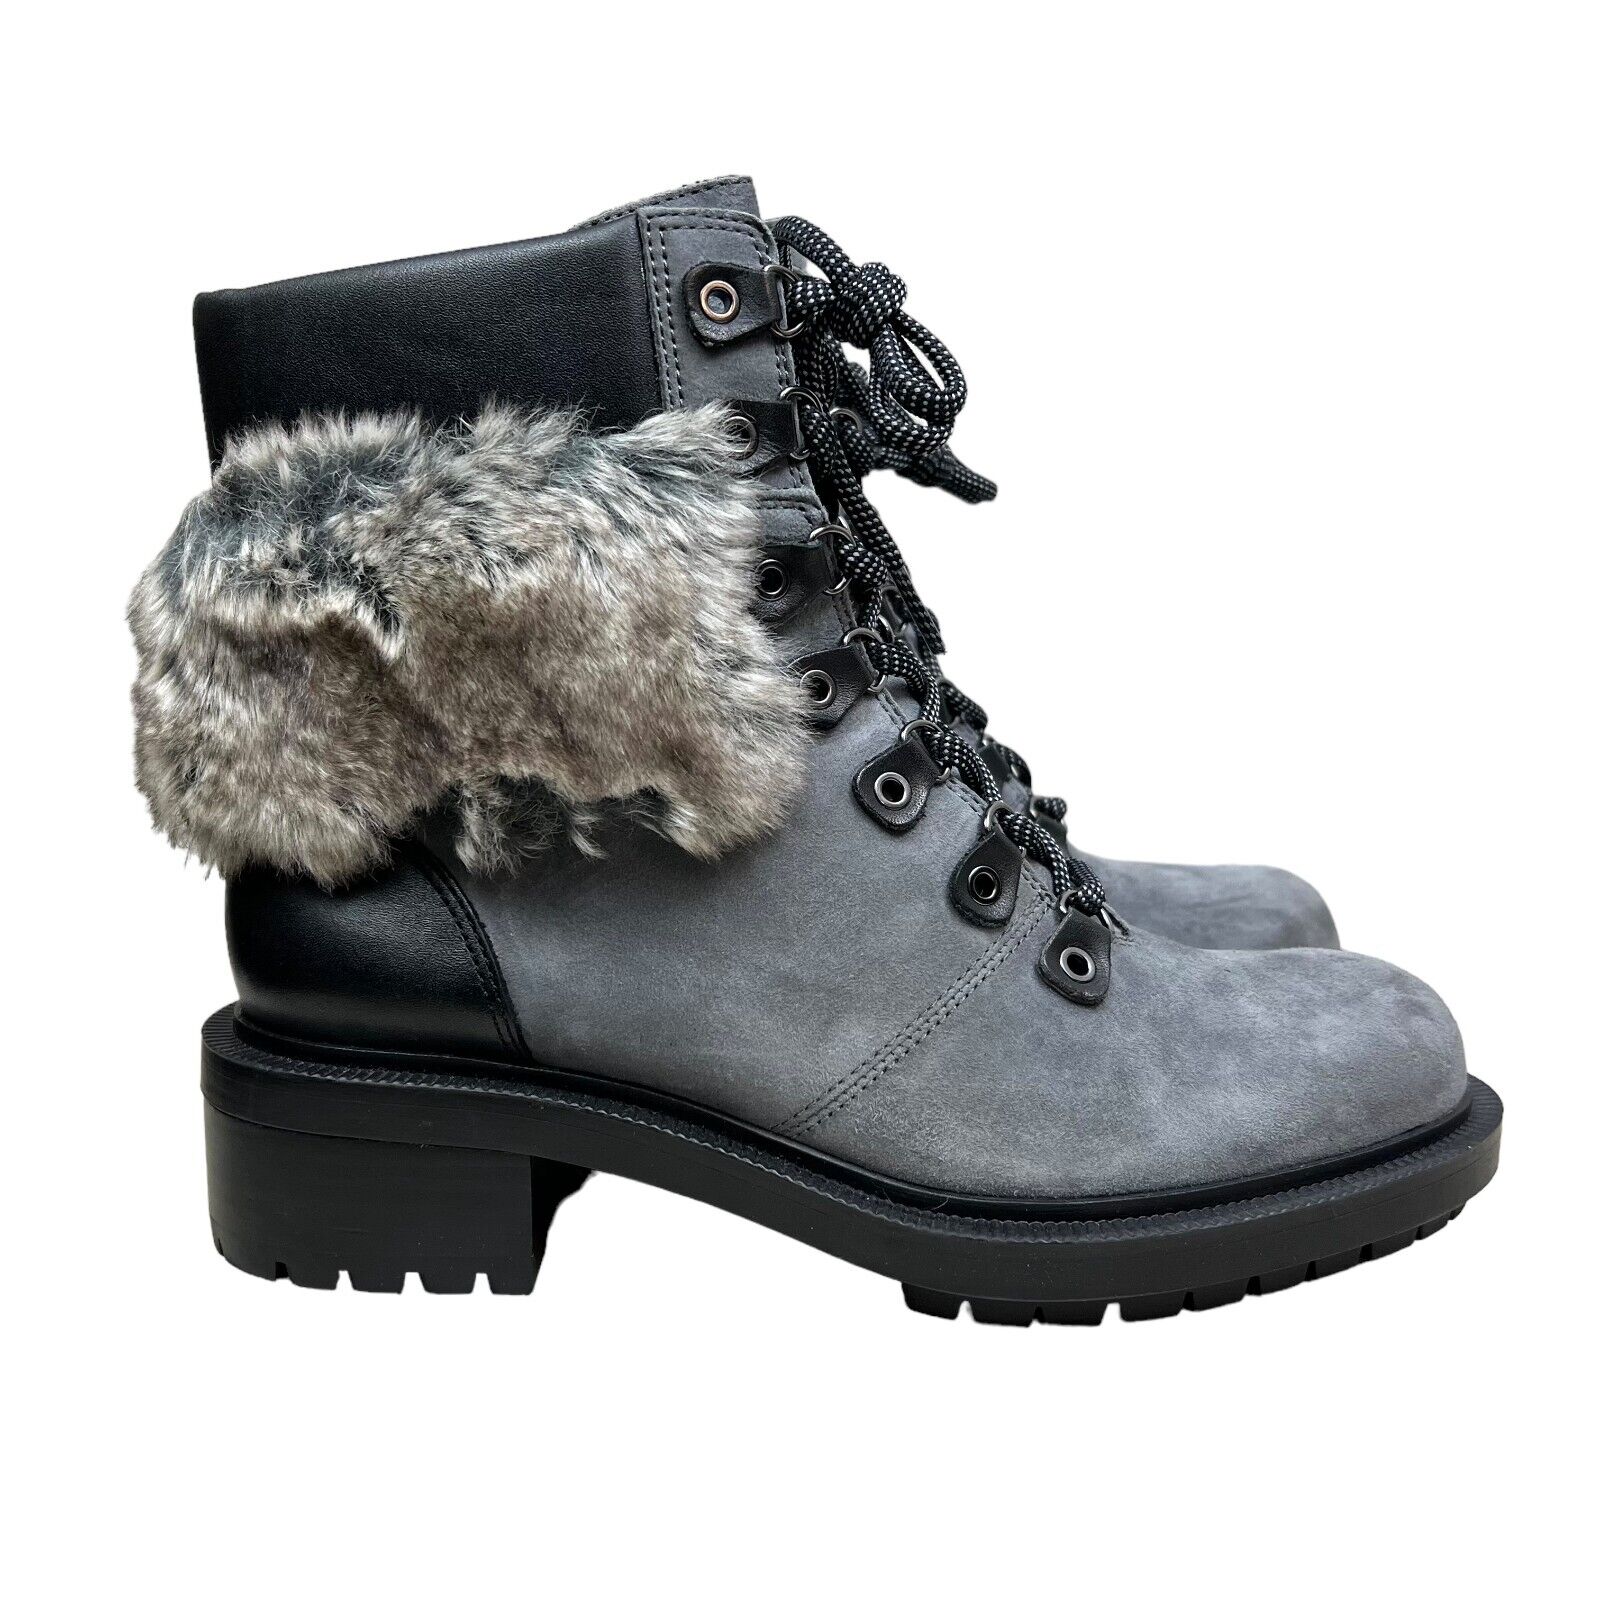 Botkier Madigan Boots Waterproof Leather Faux Fur Trim Slate Gray Women Sz 8M